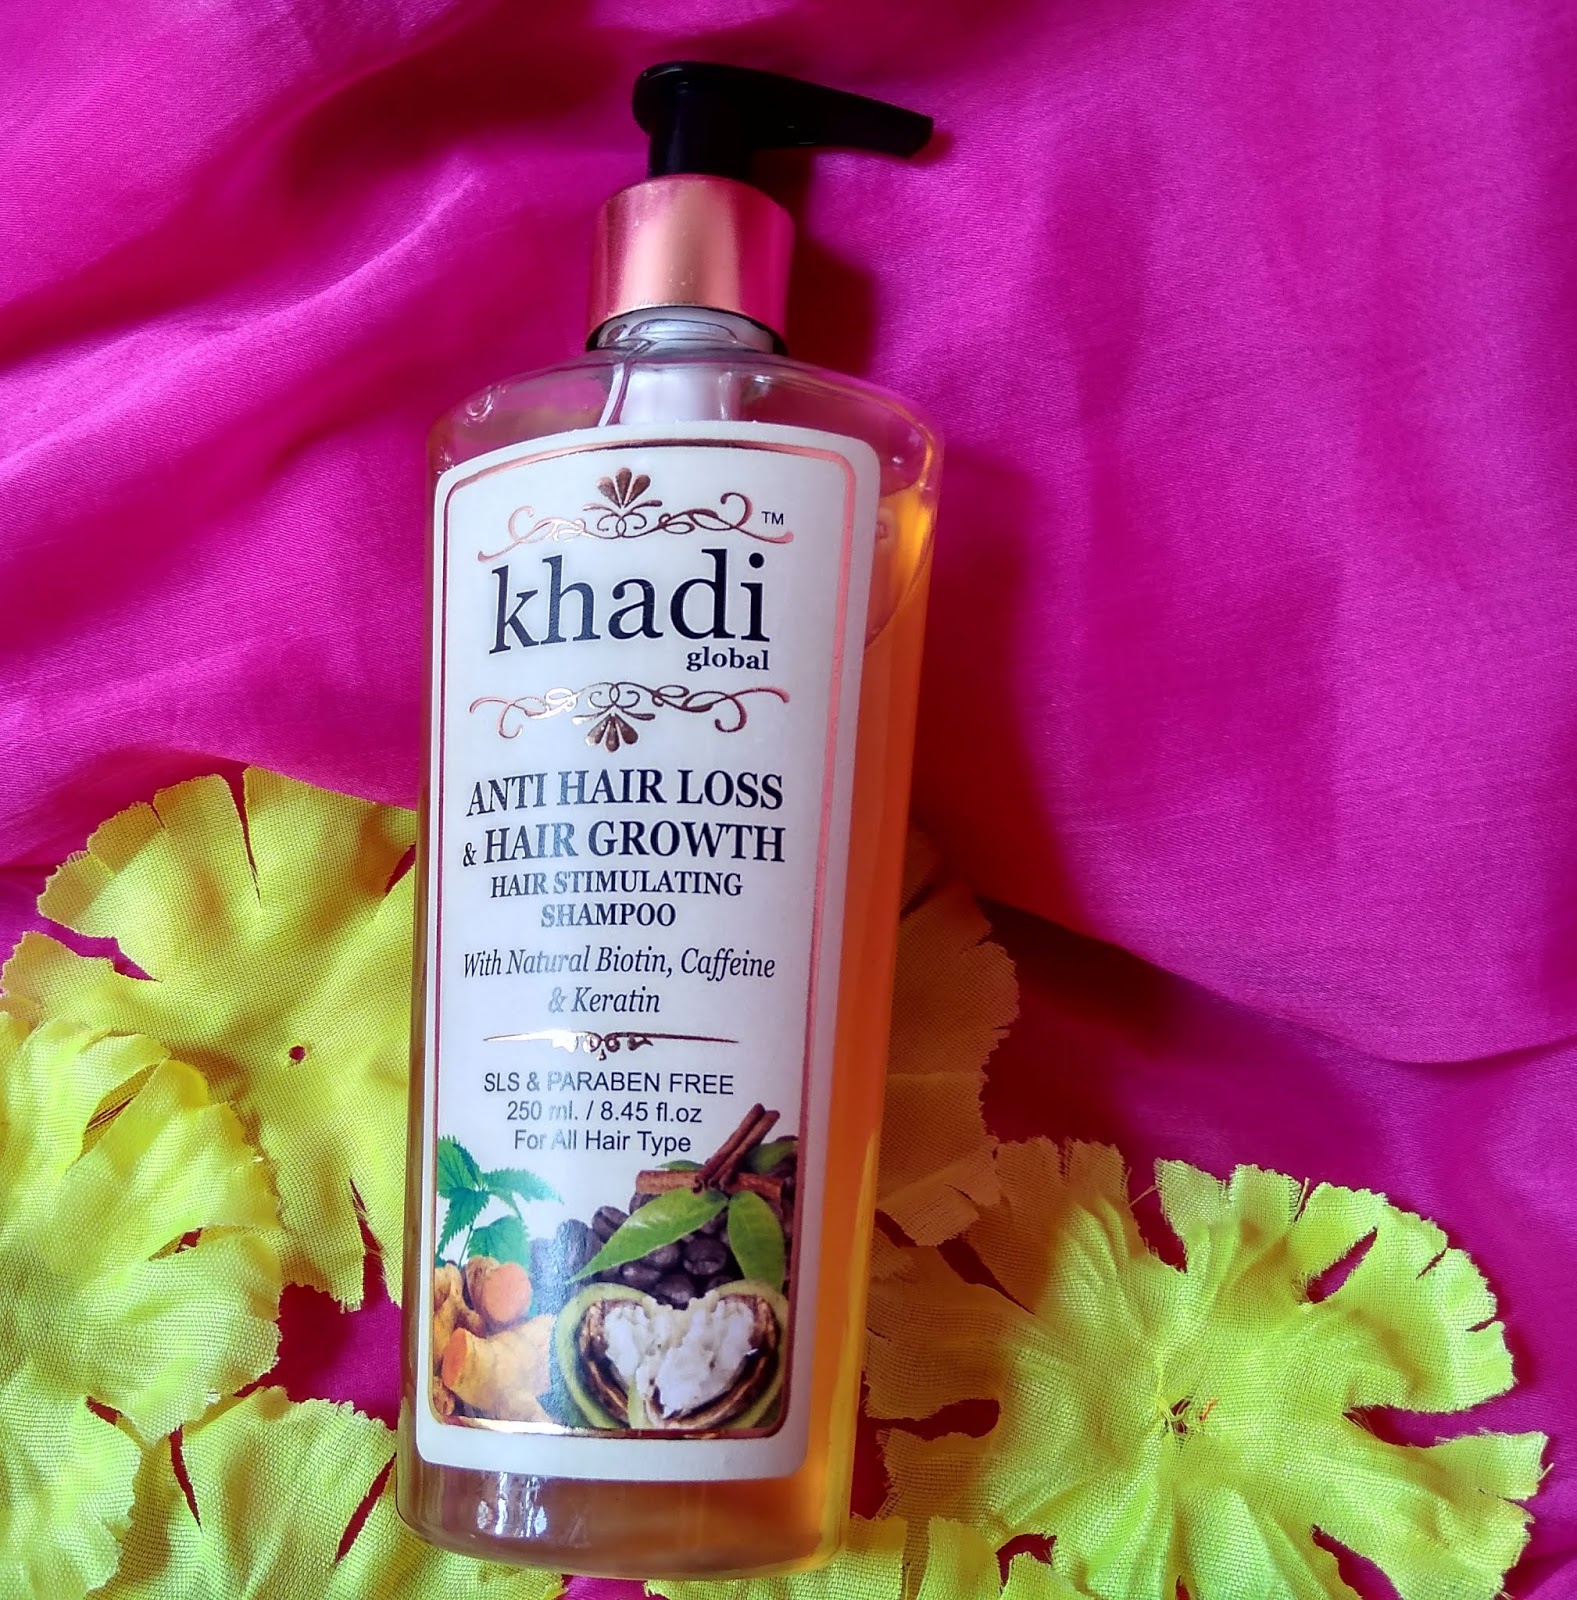 Khadi Global Anti Hair Loss & Hair Growth Hair Stimulating Shampoo Review